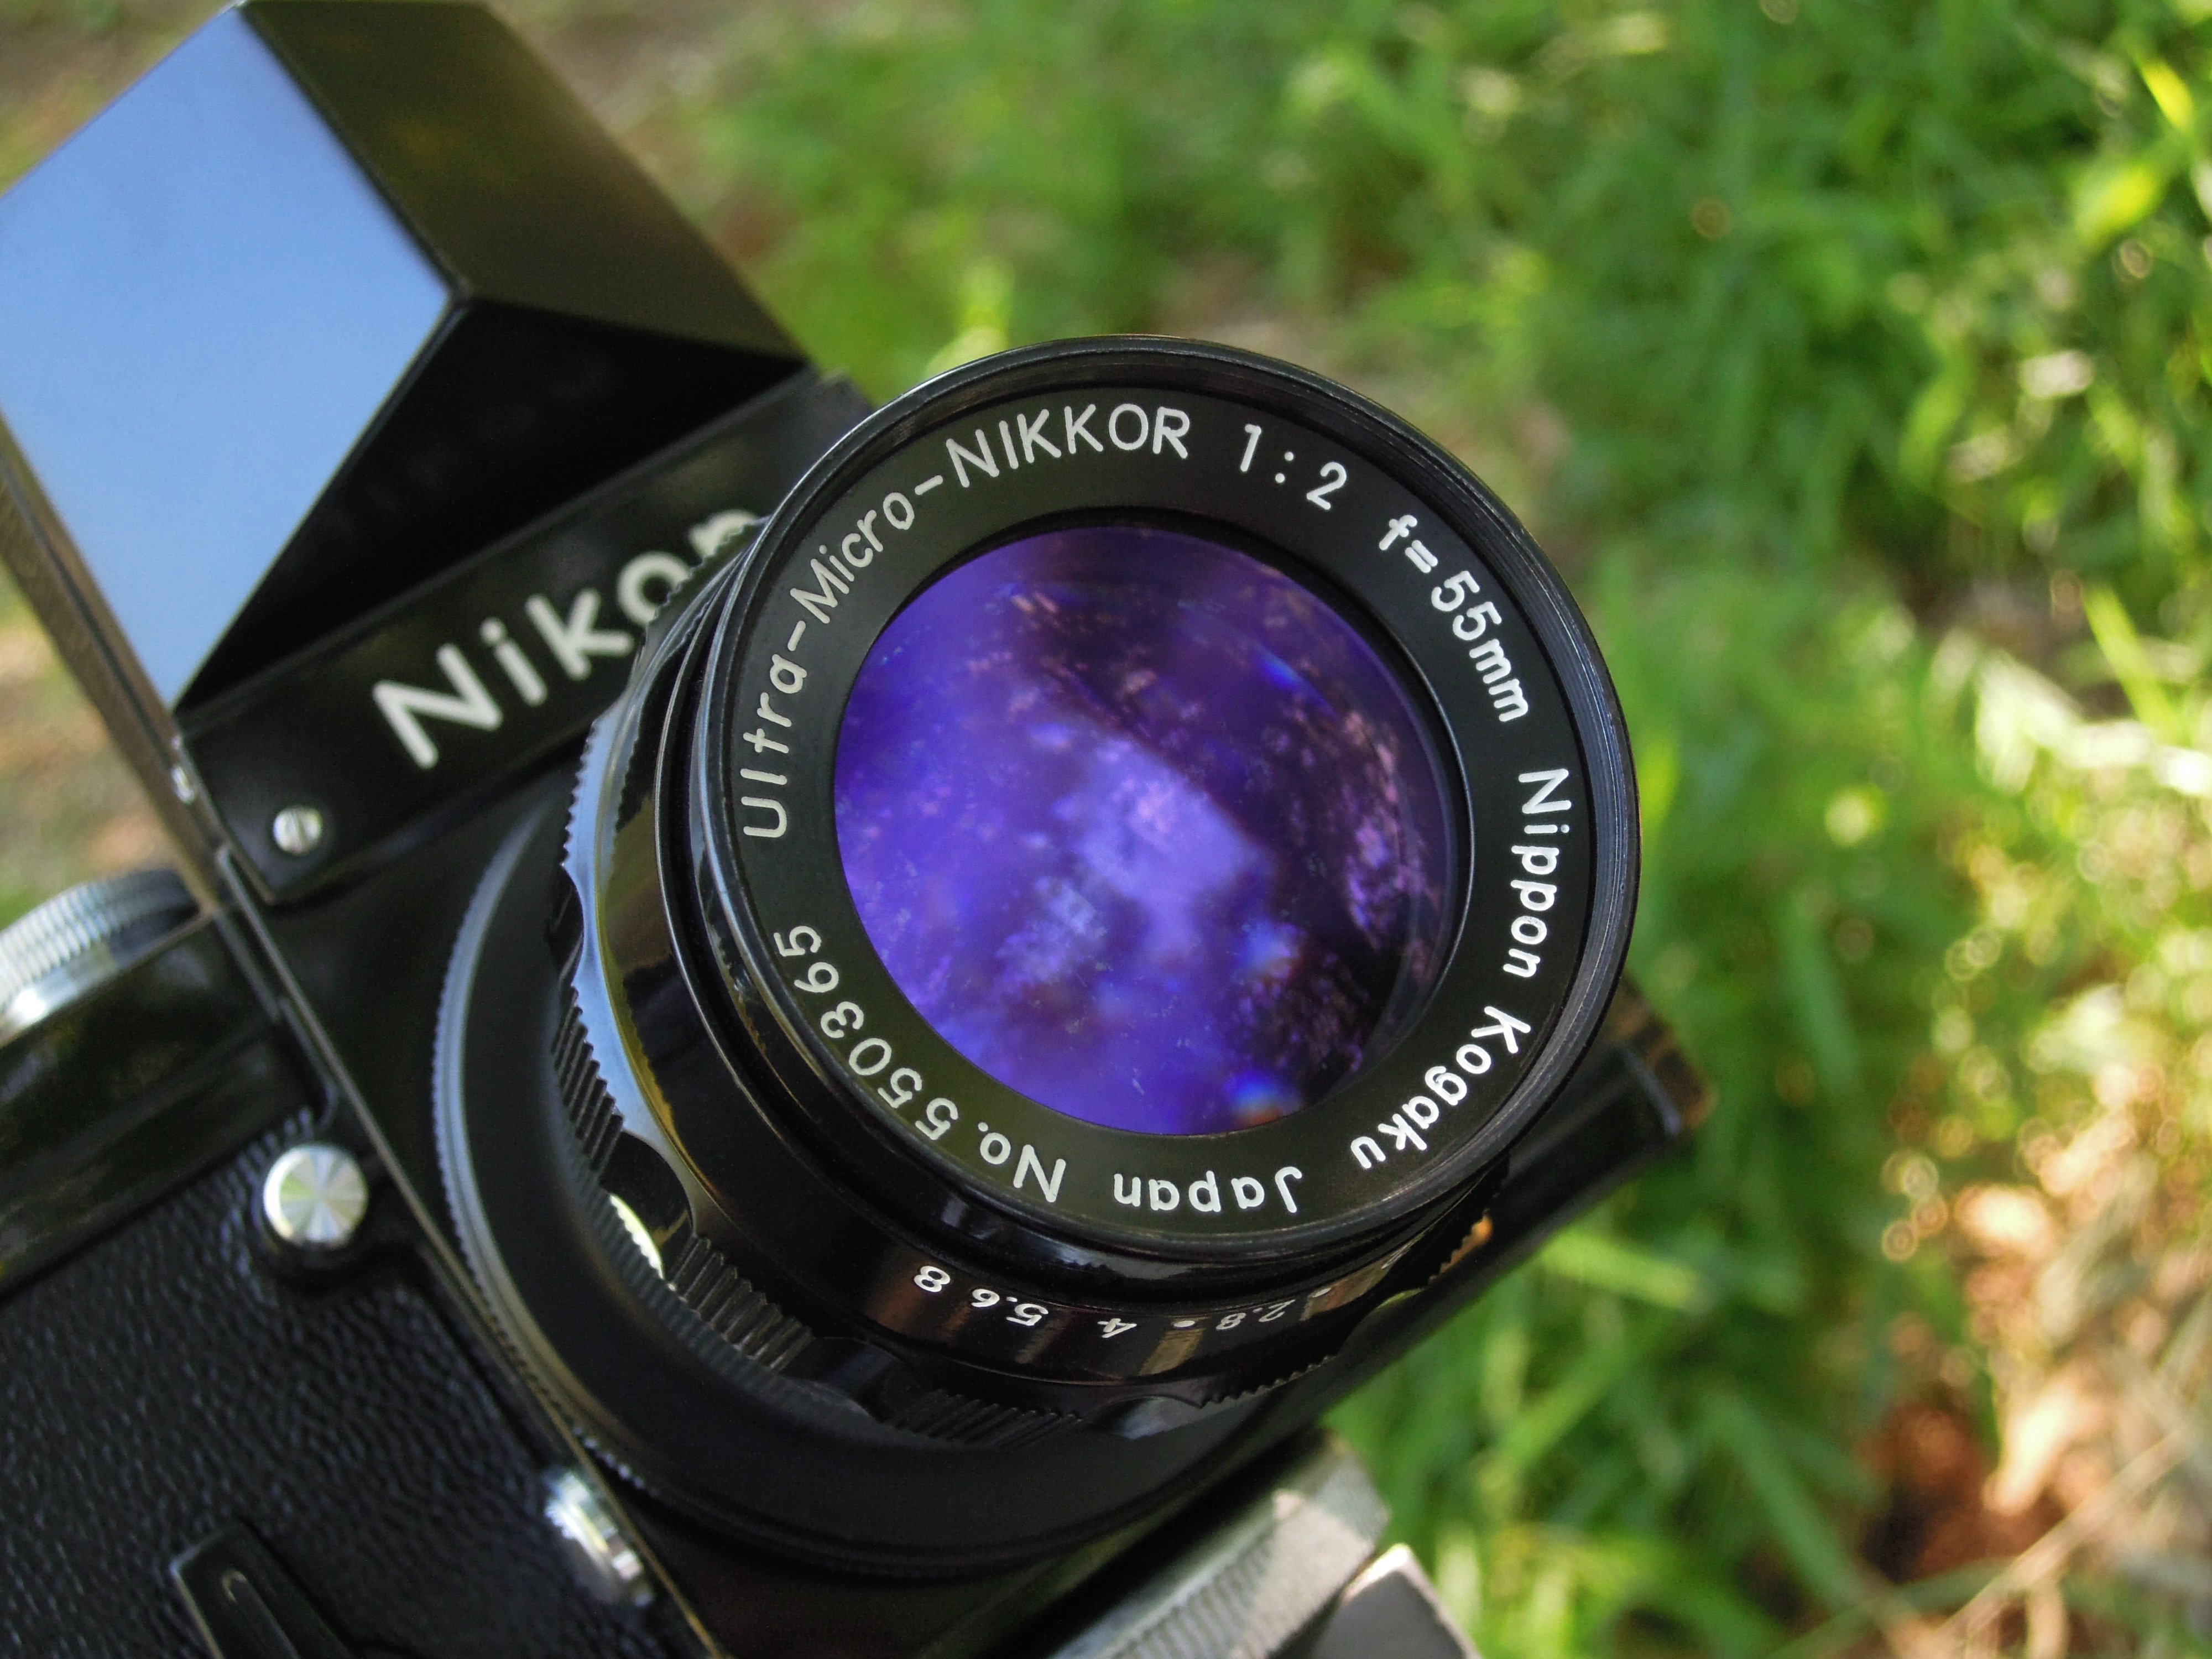 Ultra Micro Nikkor 55mm F2 Fine Dream Lens